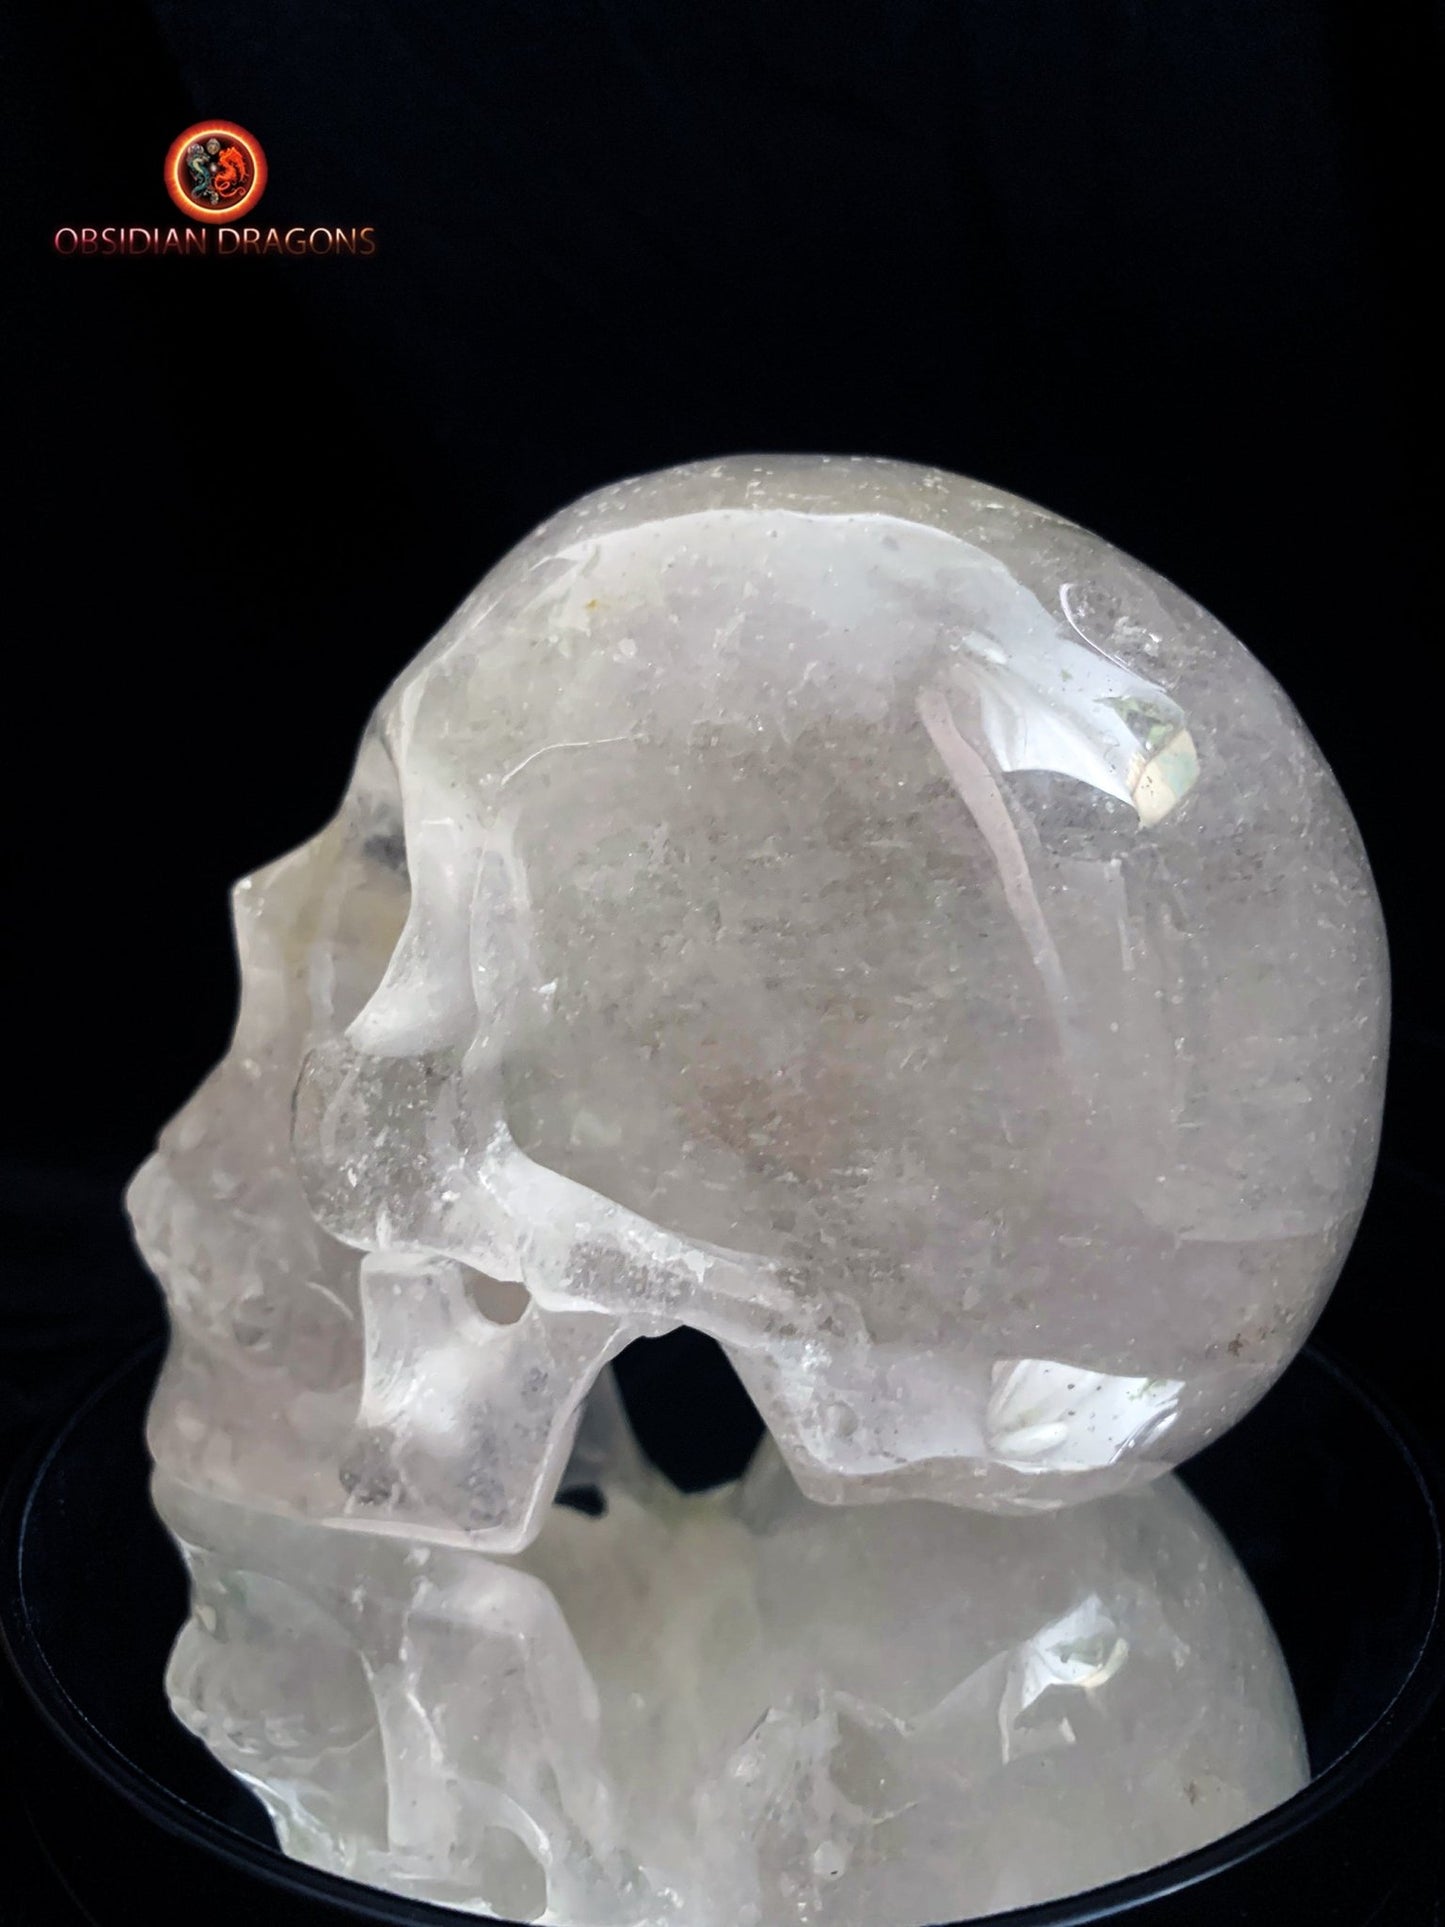 crâne de cristal authentique Himalaya- artisanal | obsidian dragons